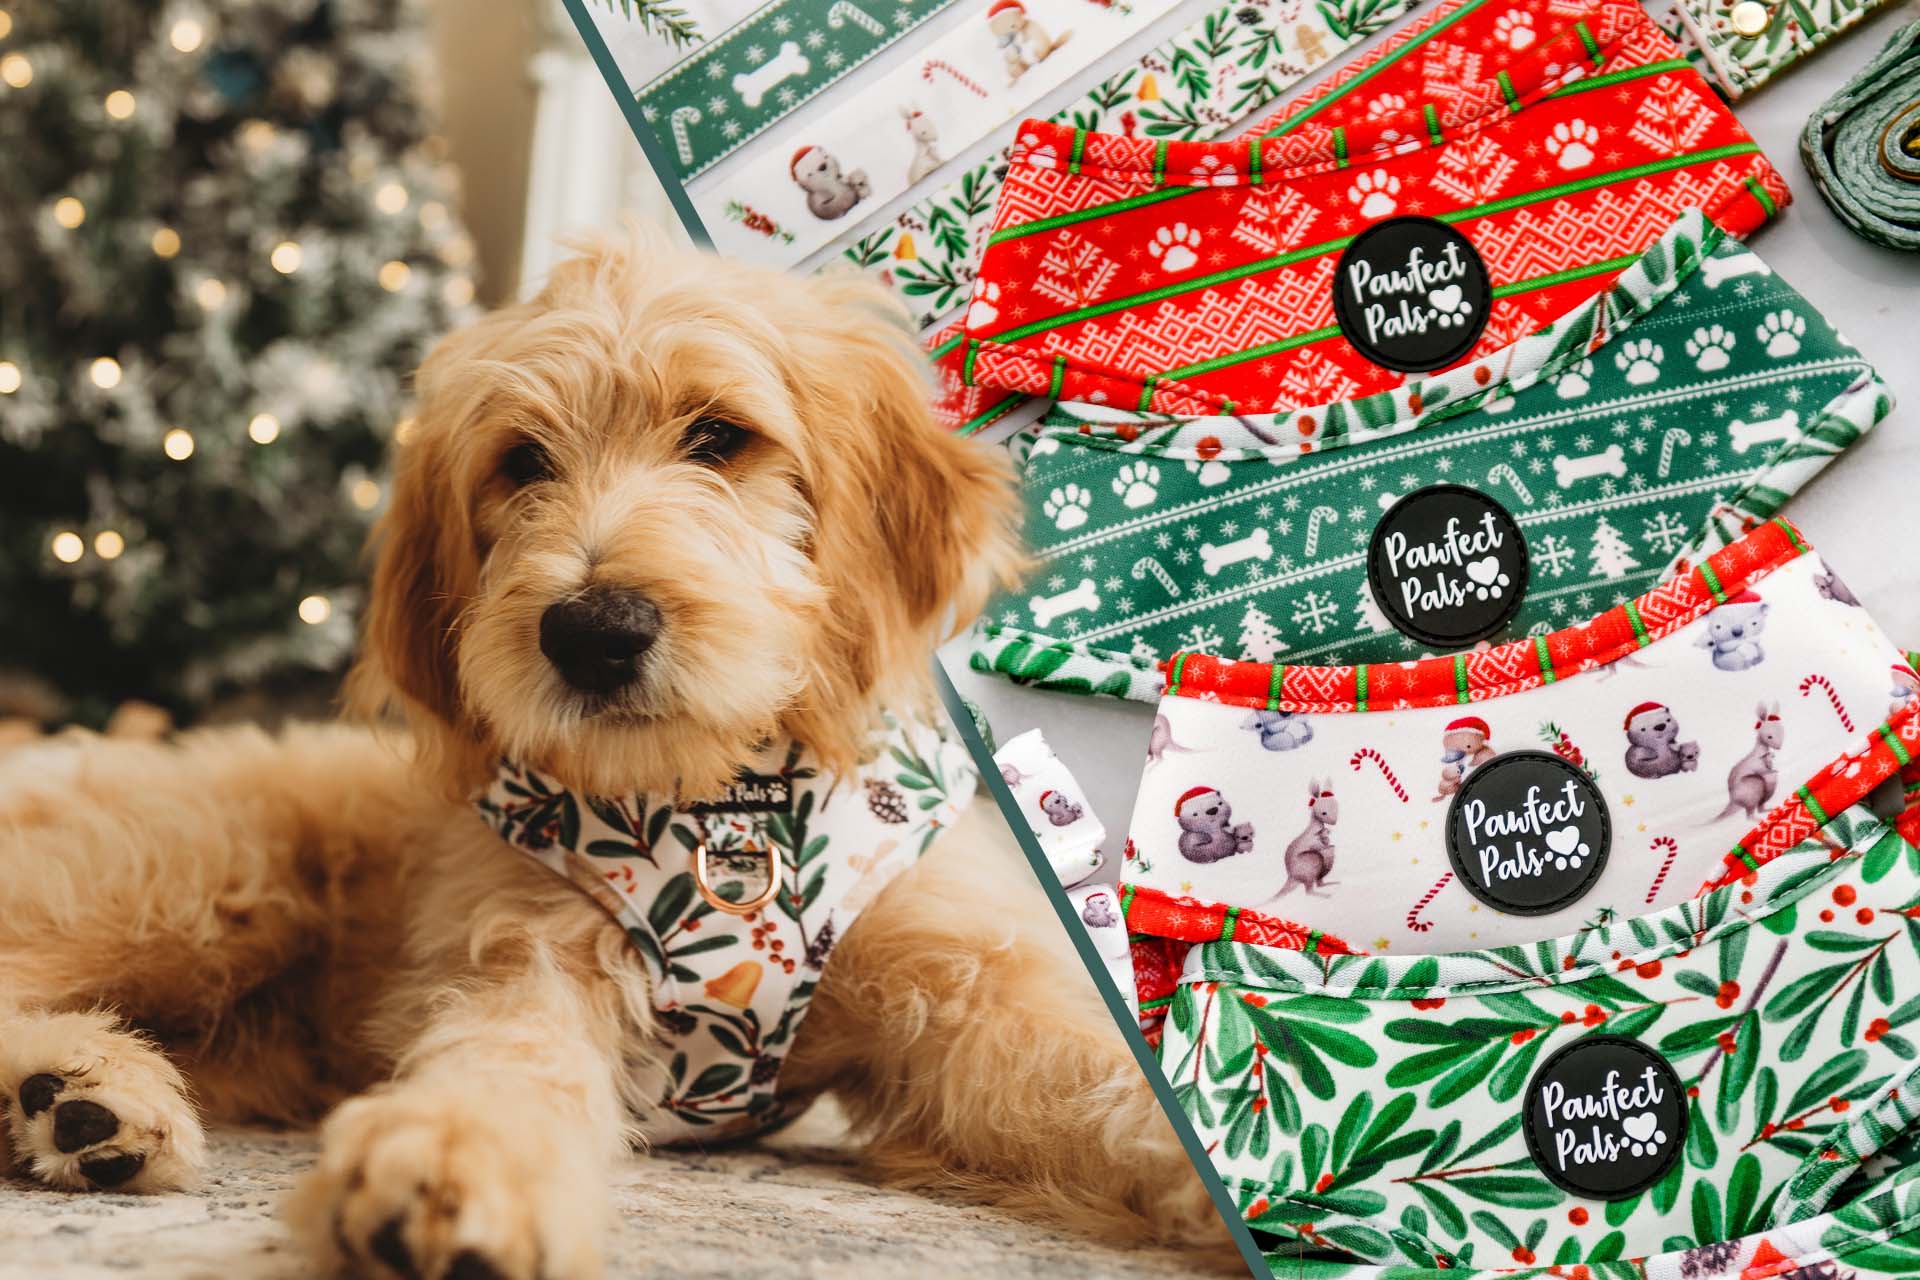 AmbassaDOG alongside the Christmas-themed dog accessories.